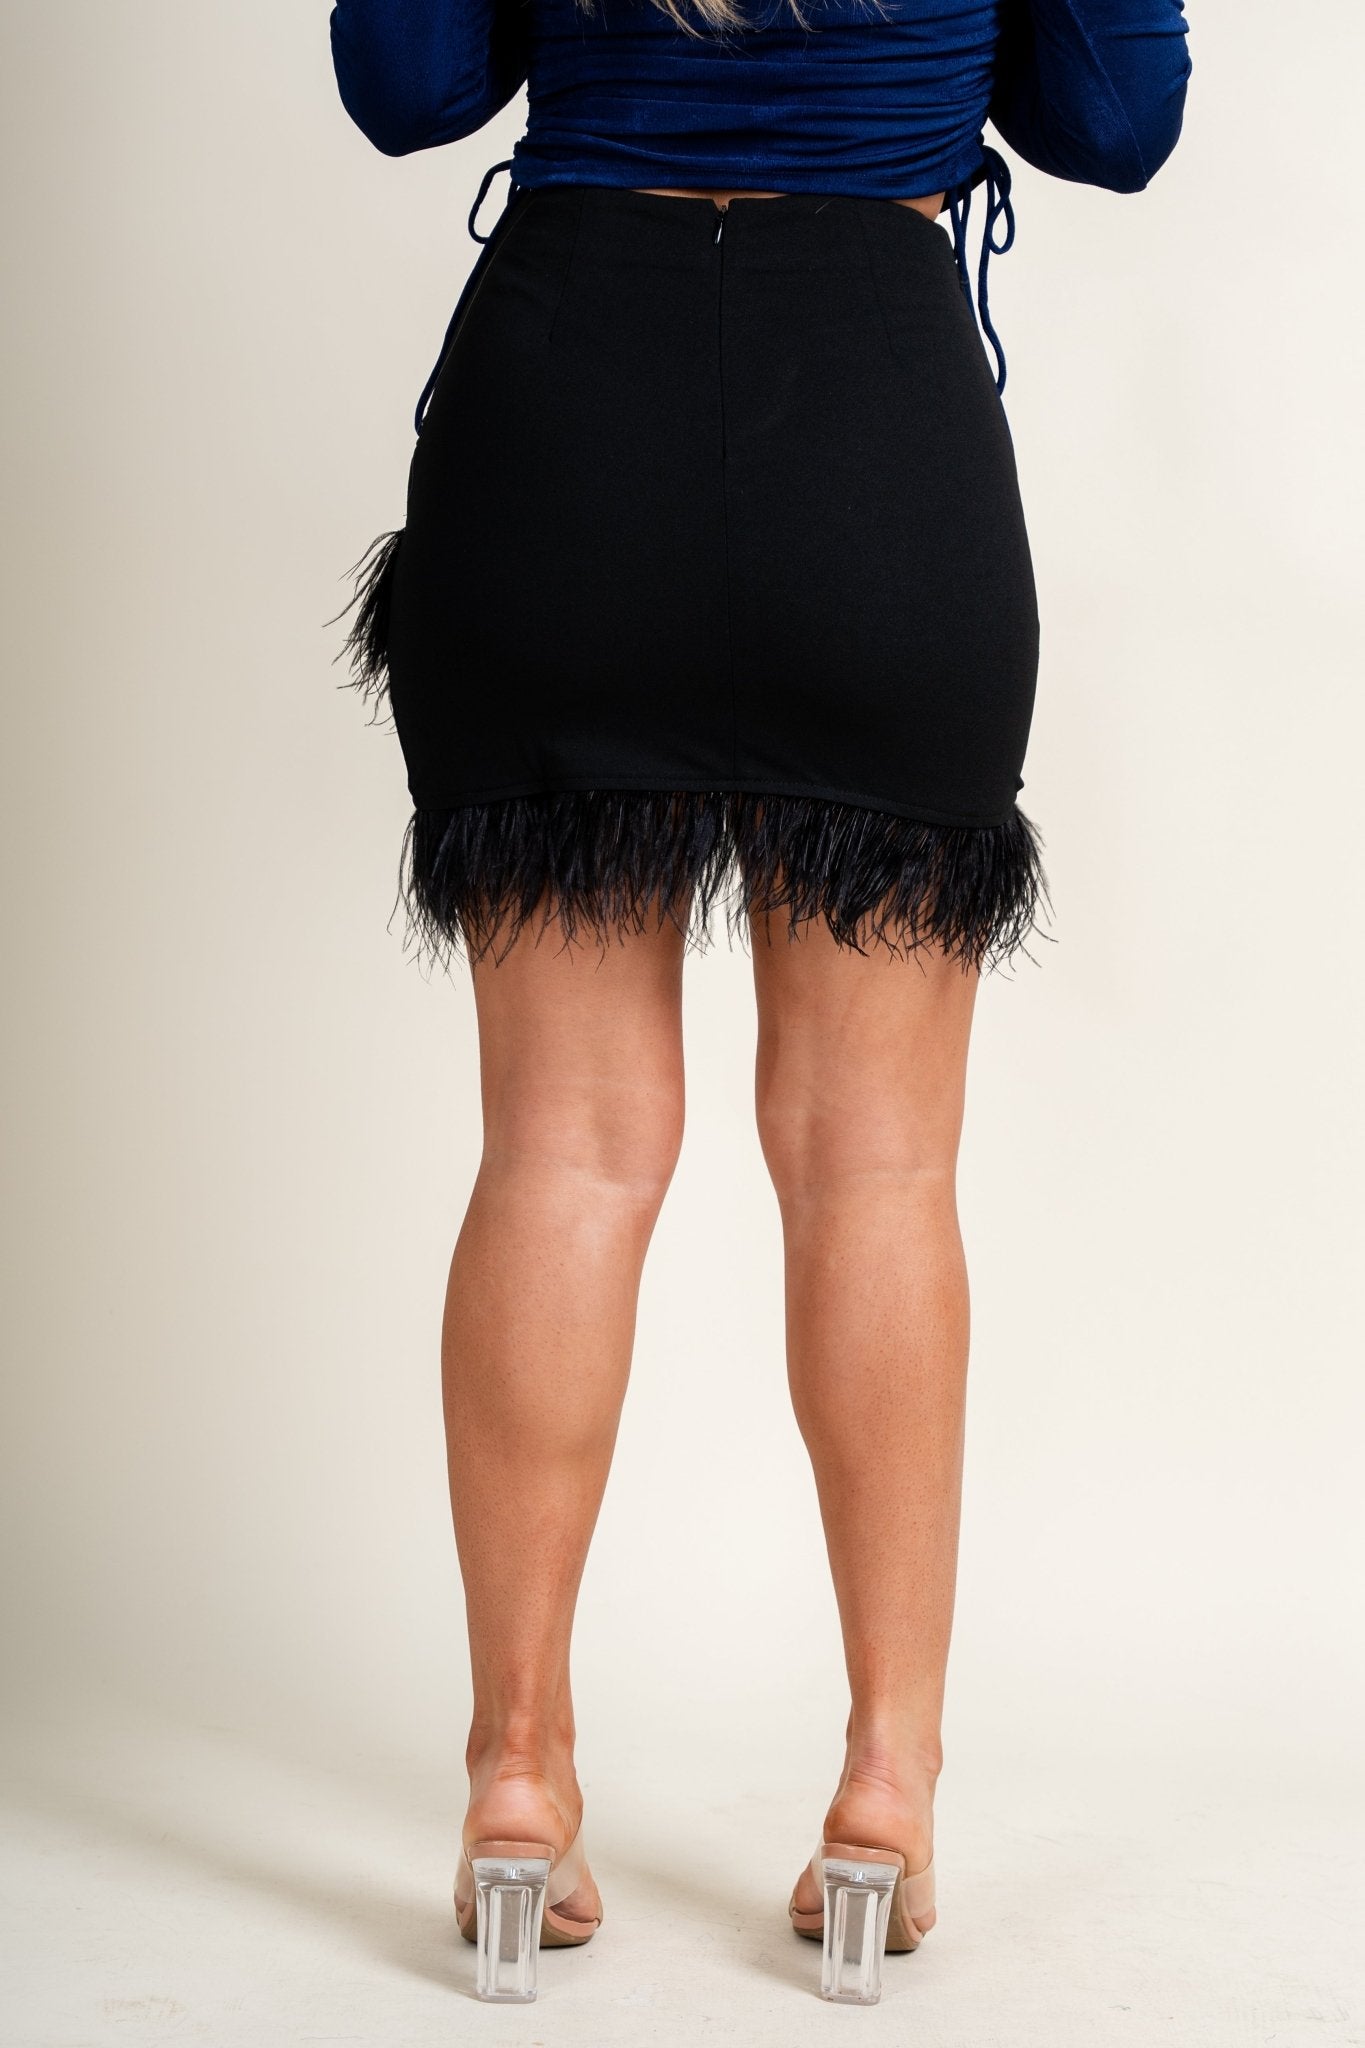 Feather trim wrap skirt black | Lush Fashion Lounge: boutique fashion skirts, affordable boutique skirts, cute affordable skirts